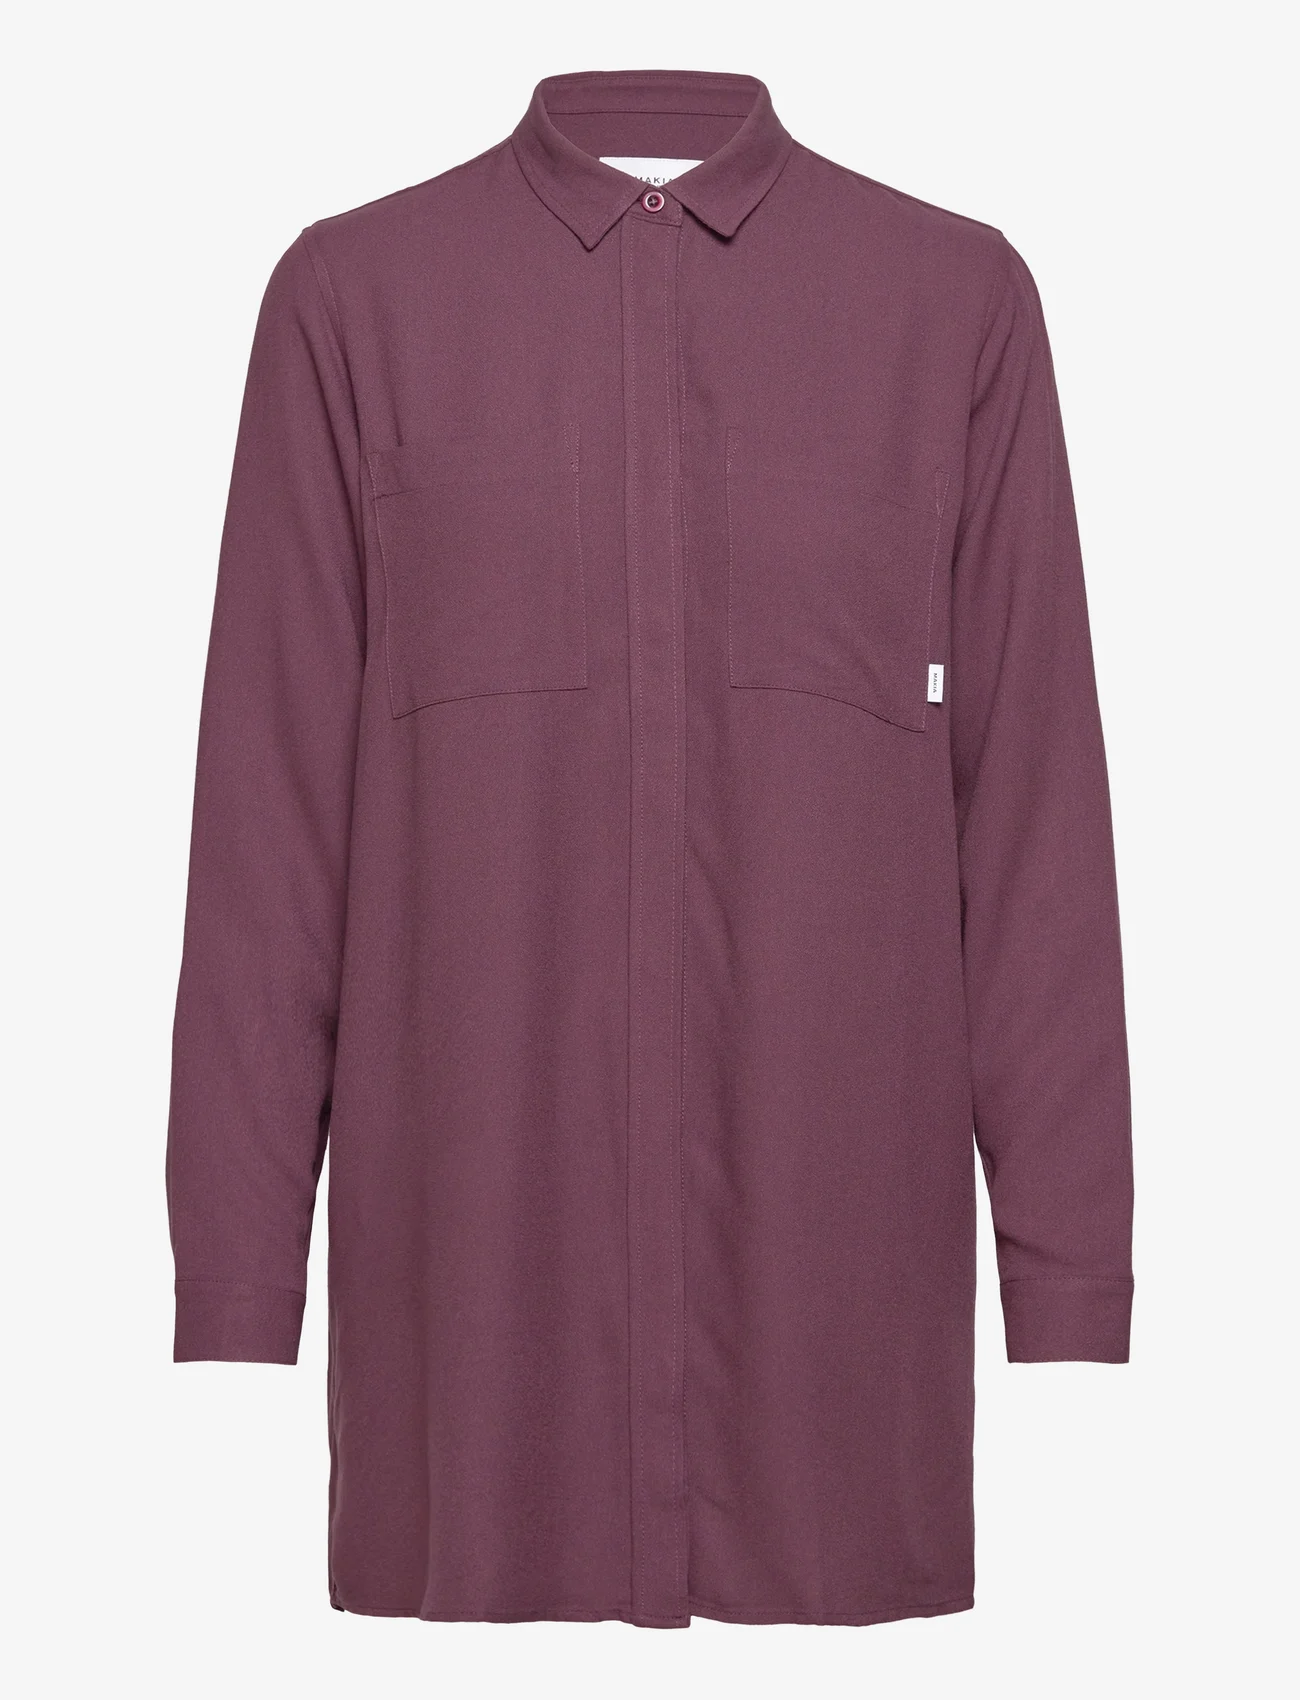 Makia - Nominal Shirt - långärmade skjortor - wine - 0